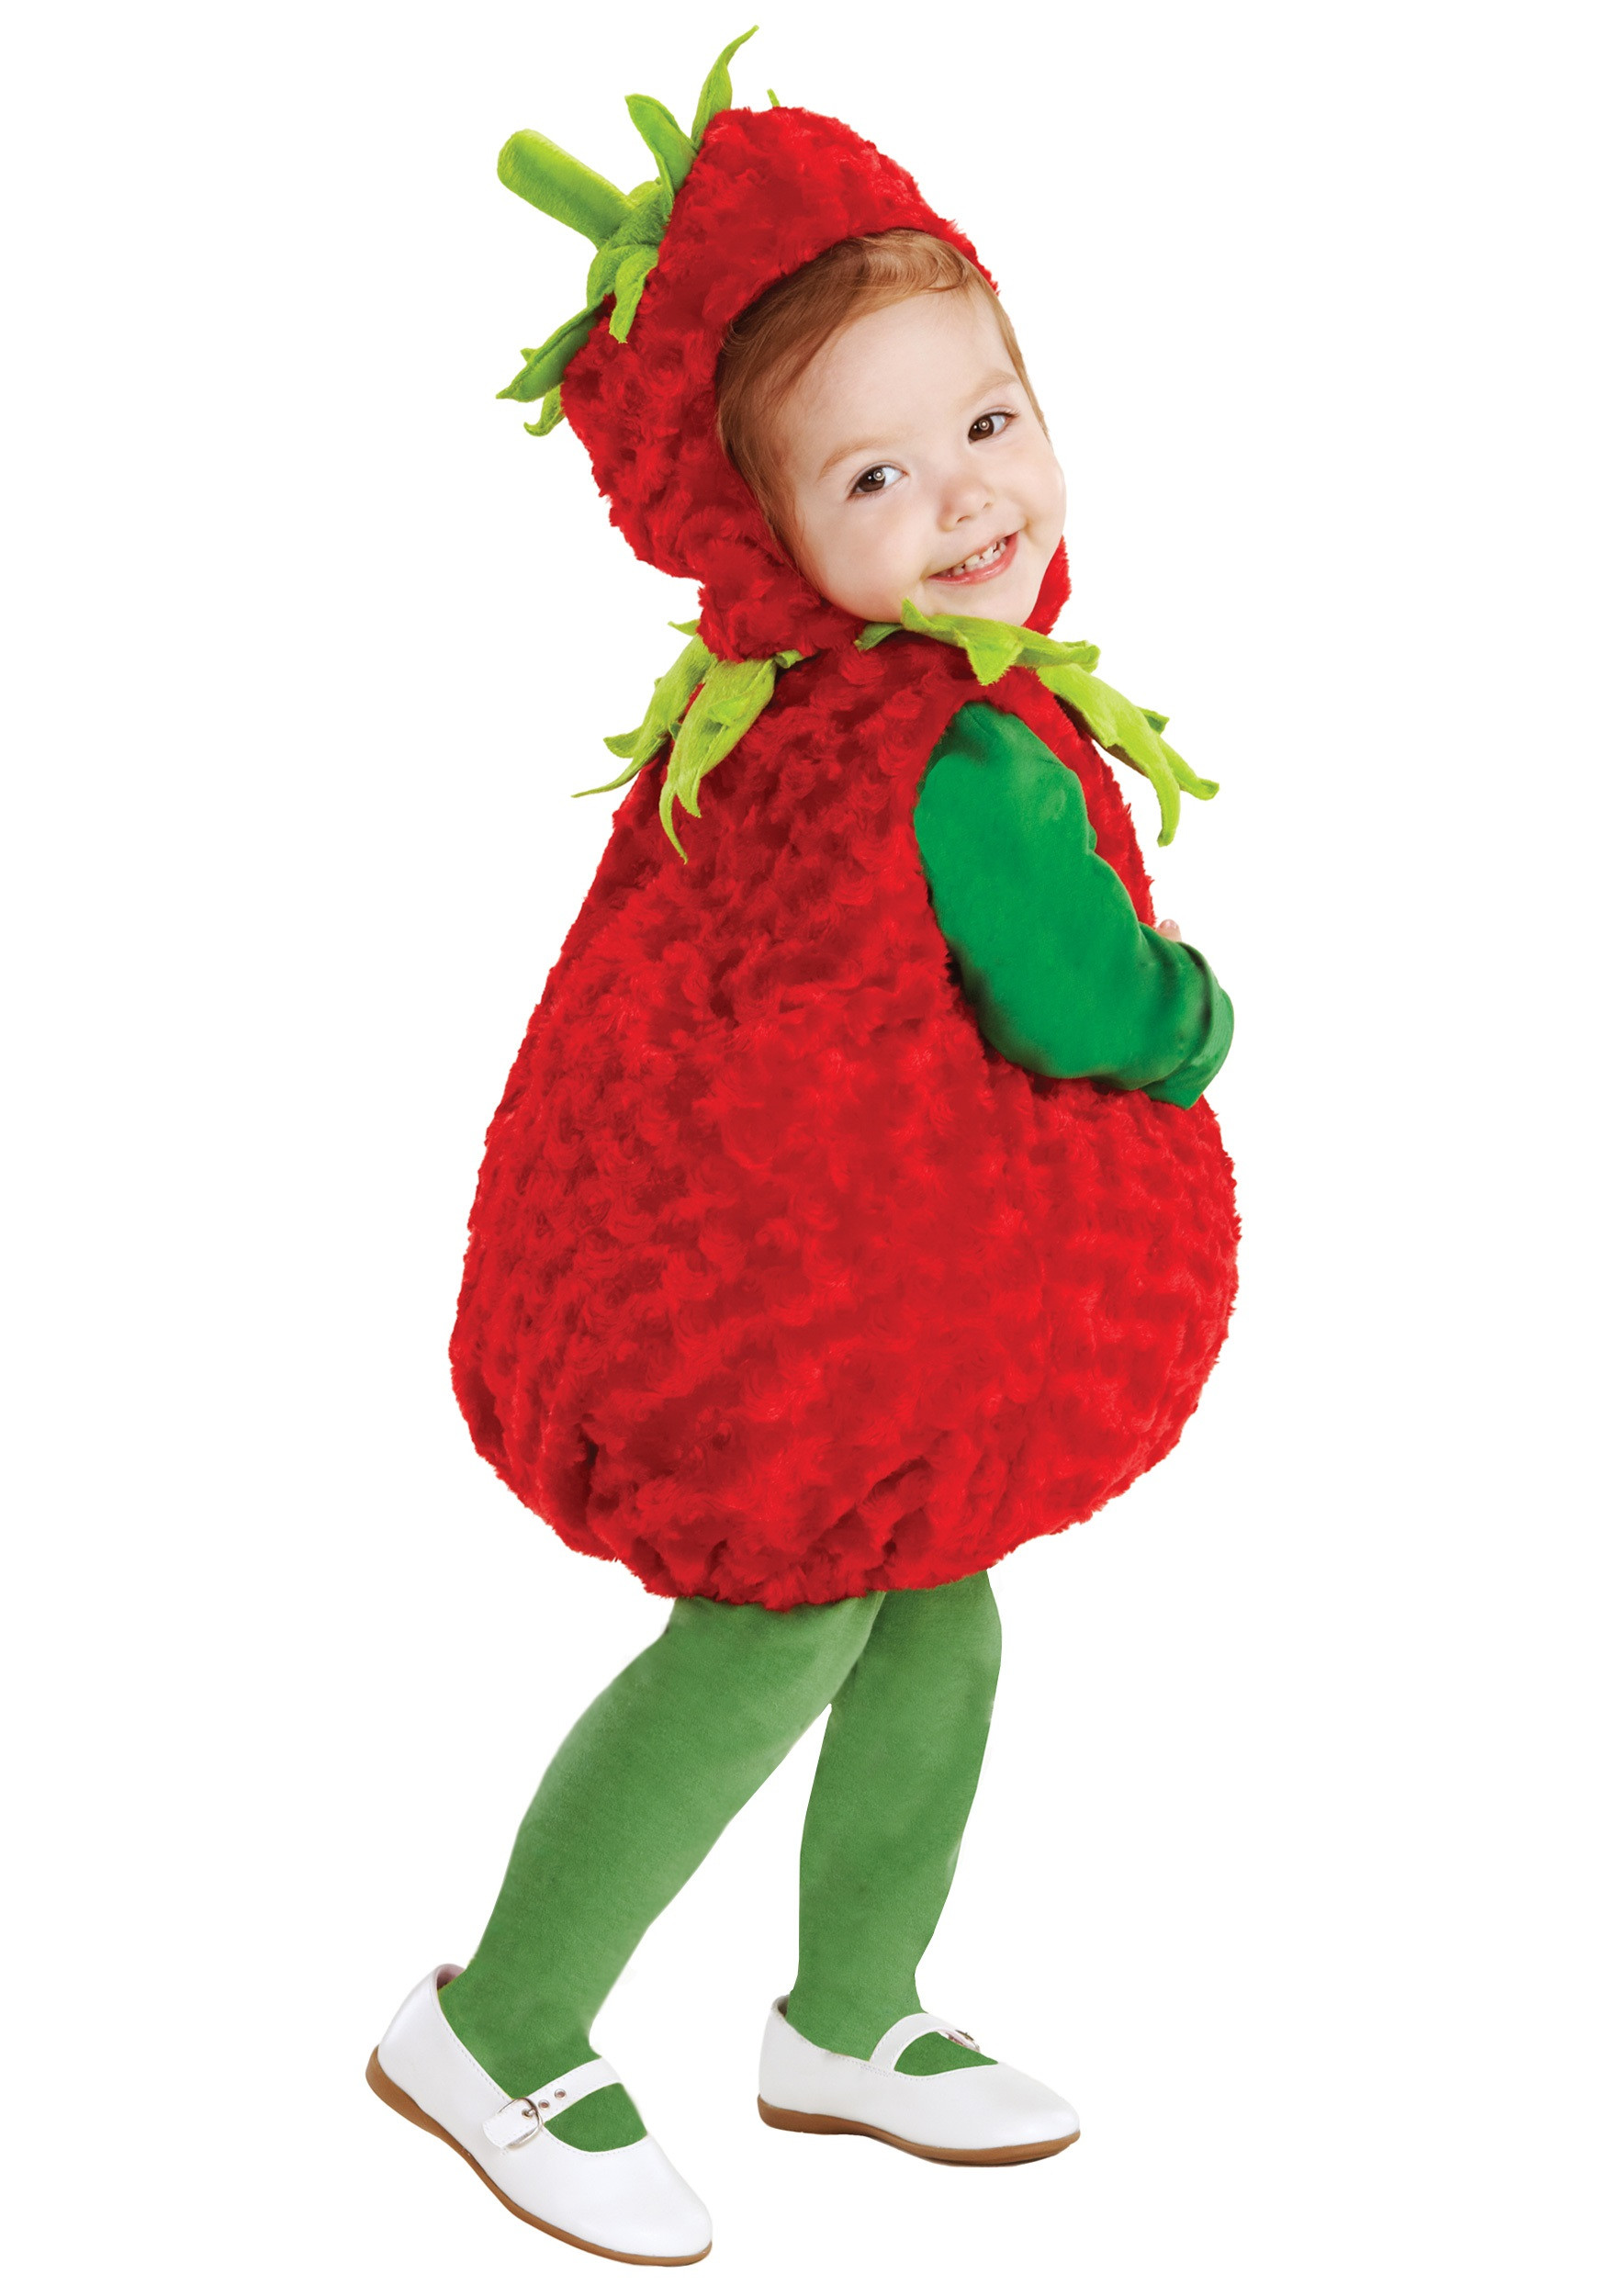 Strawberry Shortcake Costume Baby
 Toddler Red Strawberry Costume Child Food Strawberry